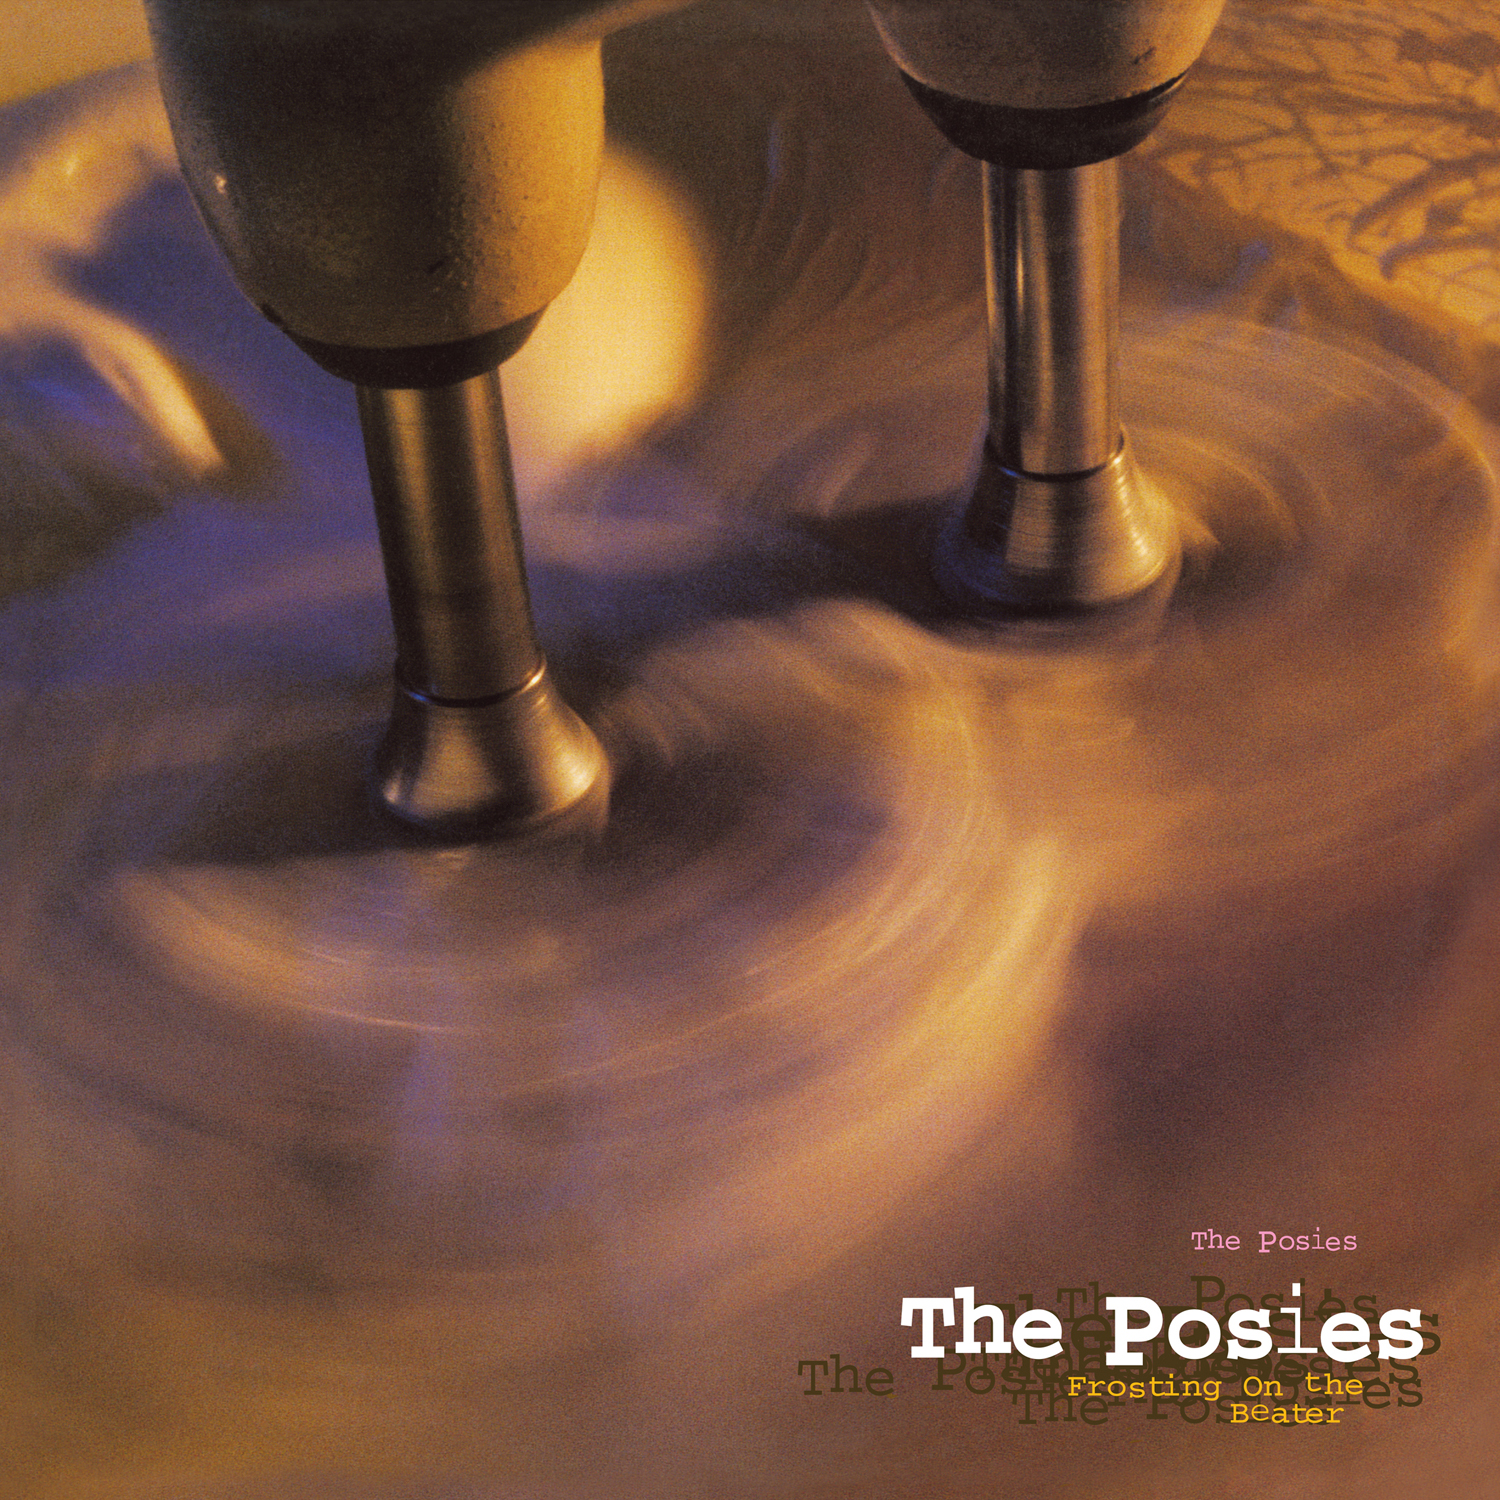 The Poseys